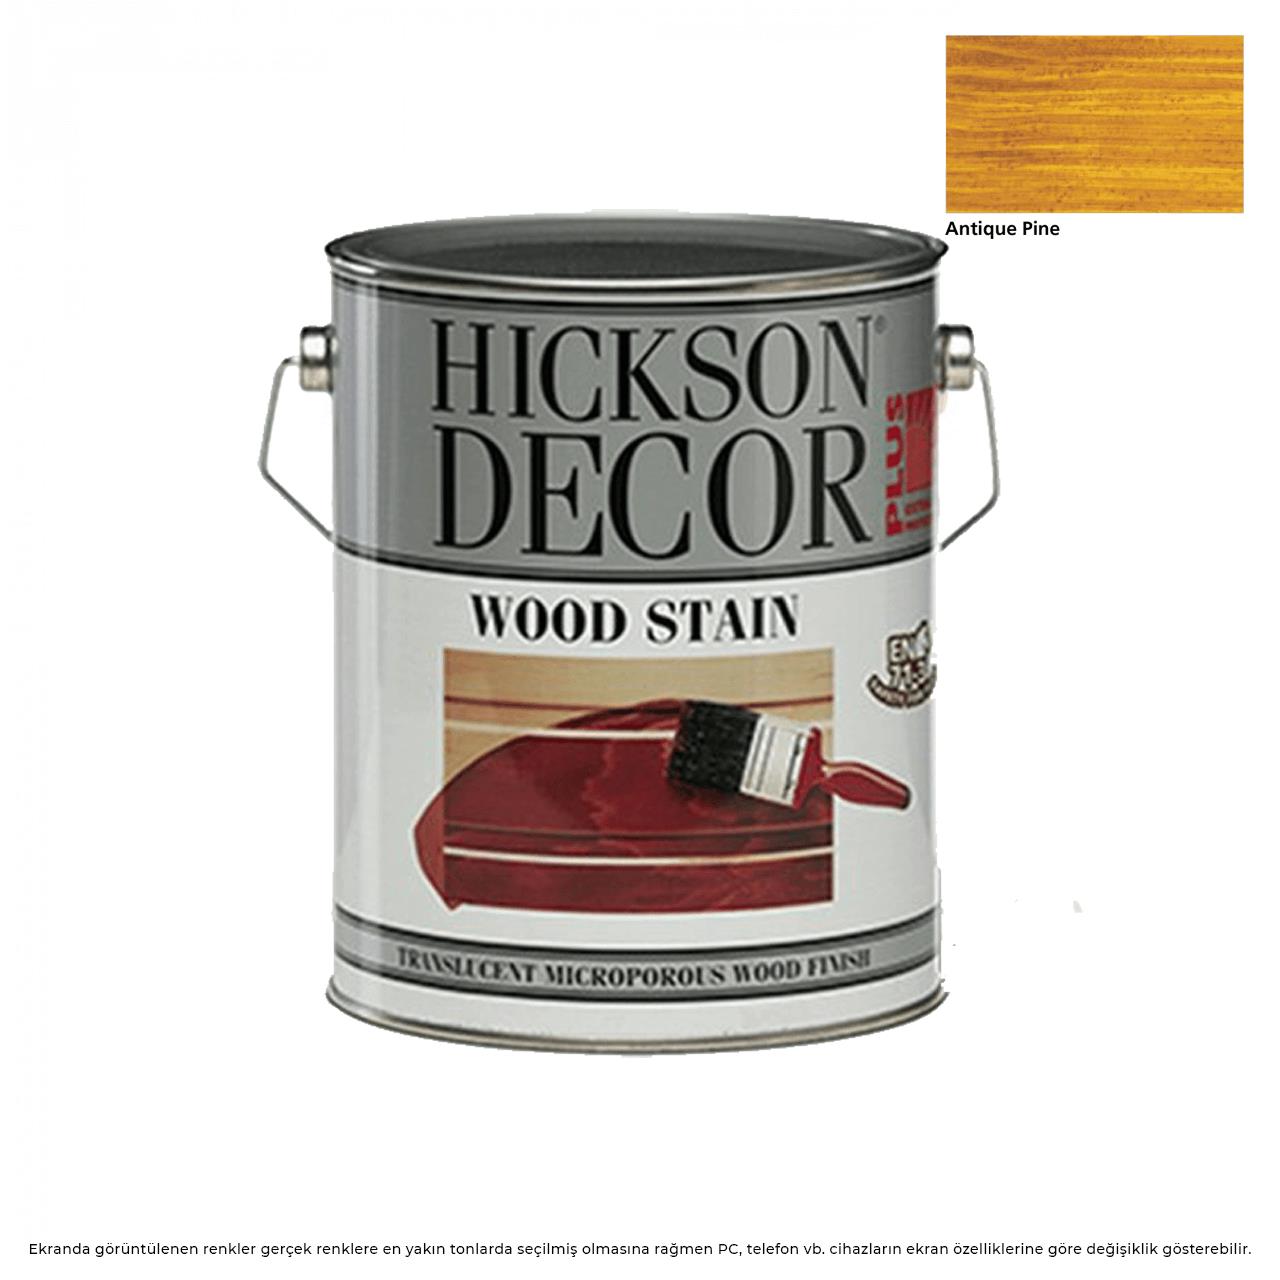 Hickson Decor Ultra Wood Stain Antique Pine 2.5 L-Solvent Bazlı Boyalar-FLZ00780